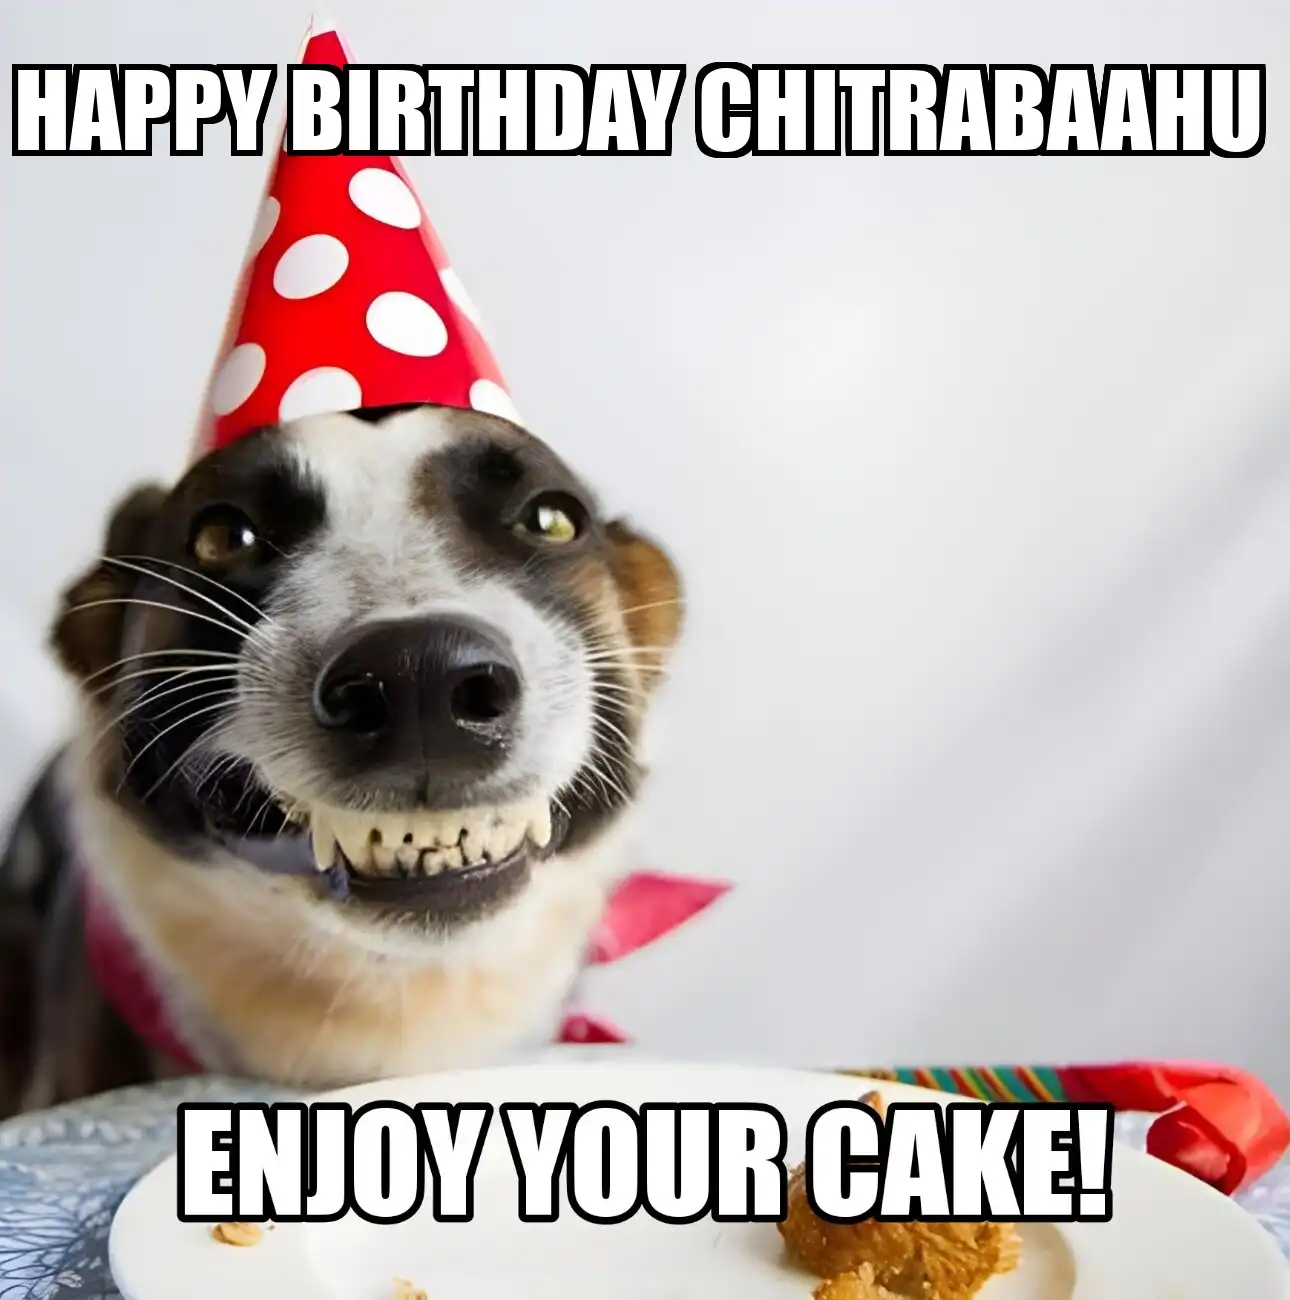 Happy Birthday Chitrabaahu Enjoy Your Cake Dog Meme